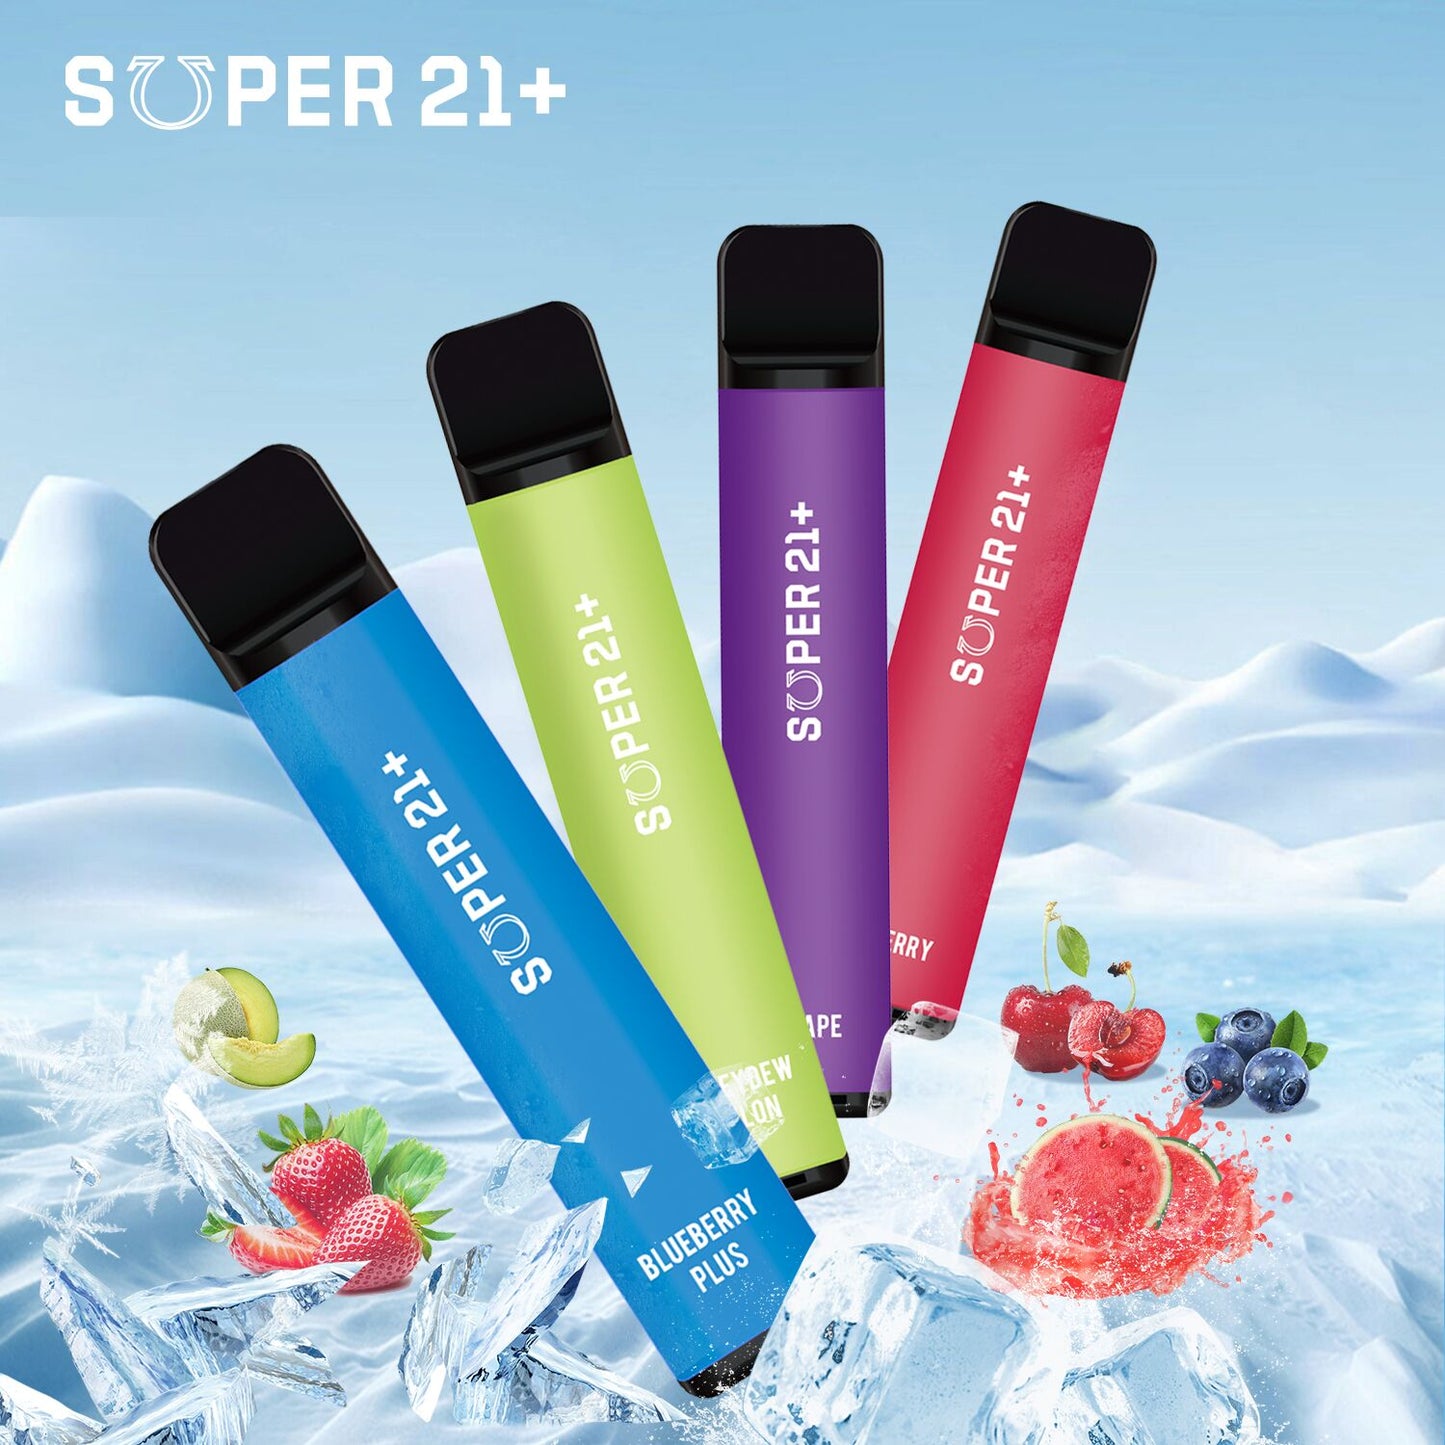 Super 21+ 1500 Energy Drink (2%)